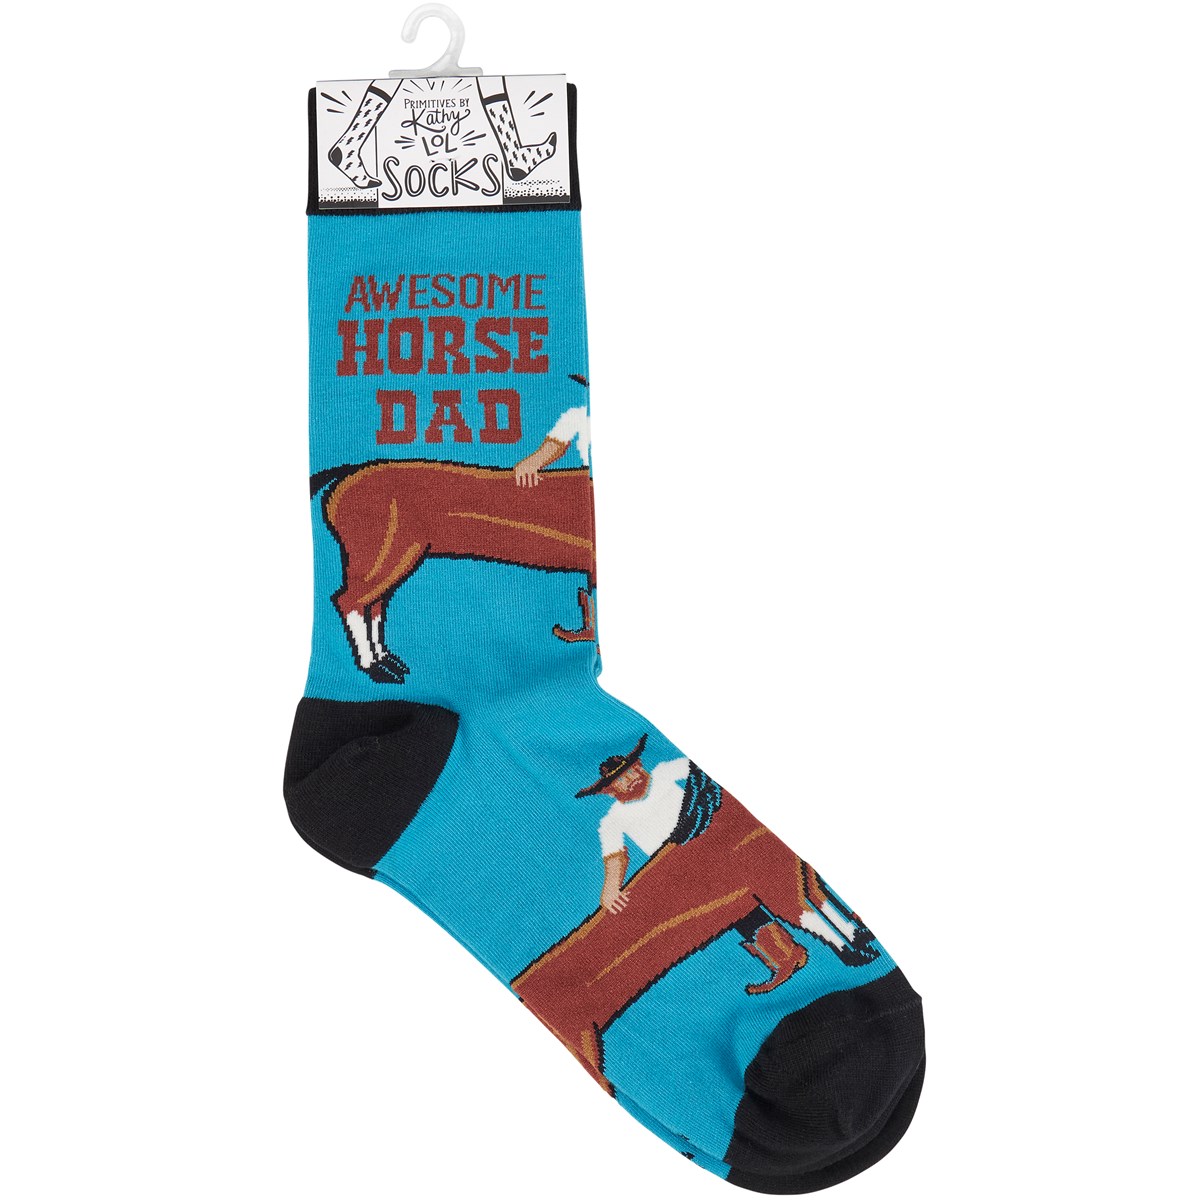 Awesome Horse Dad Socks - Cotton, Nylon, Spandex